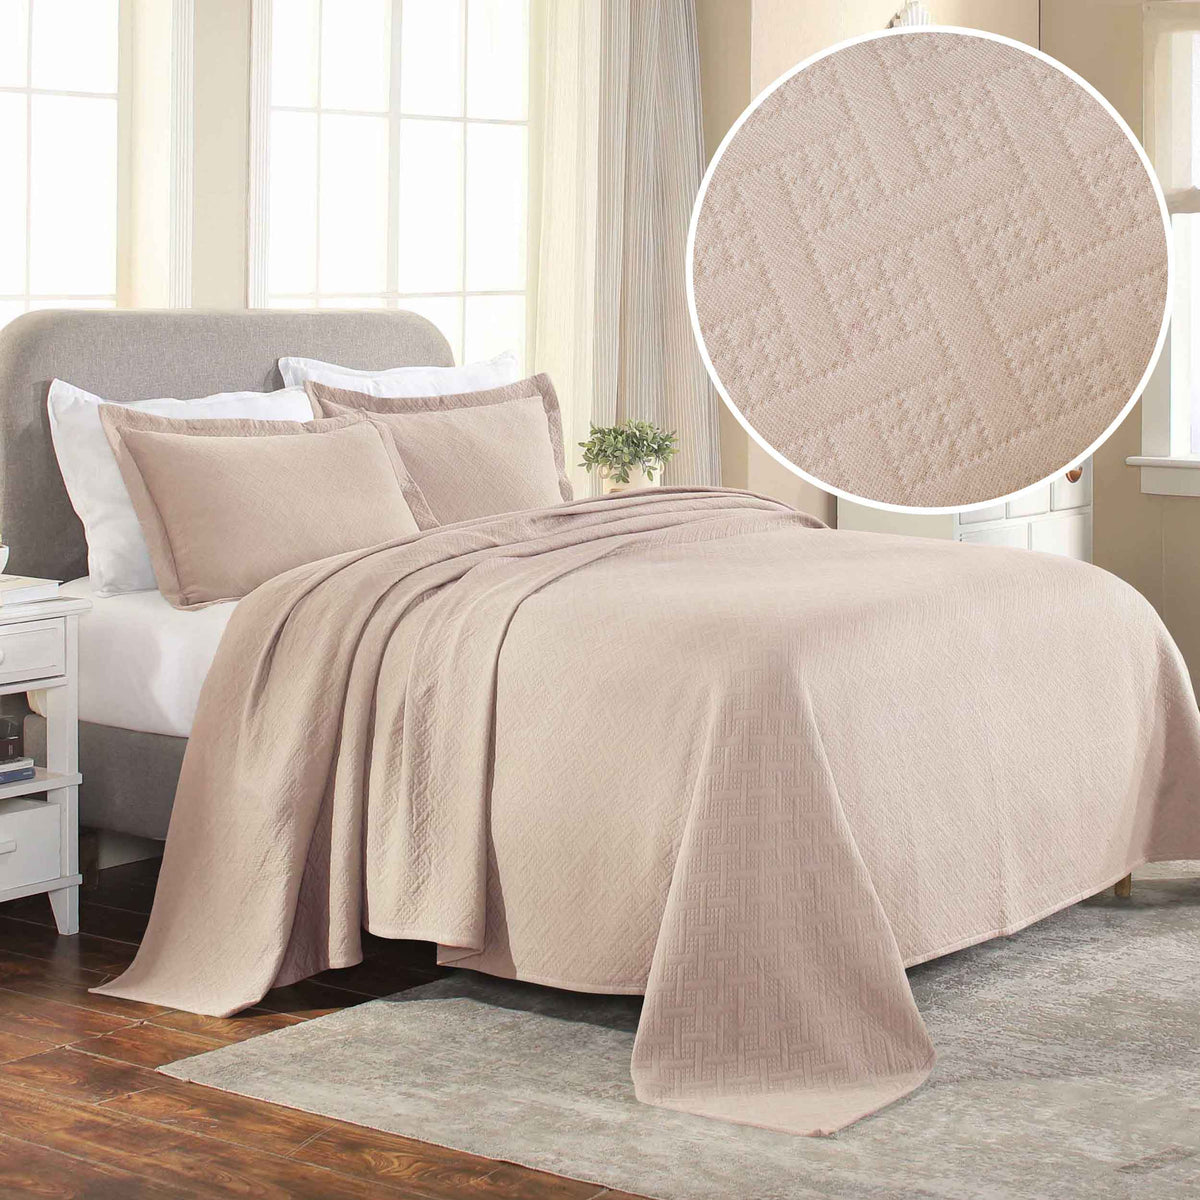 Basket Weave Matelasse Cotton Bedspread Set - Peach